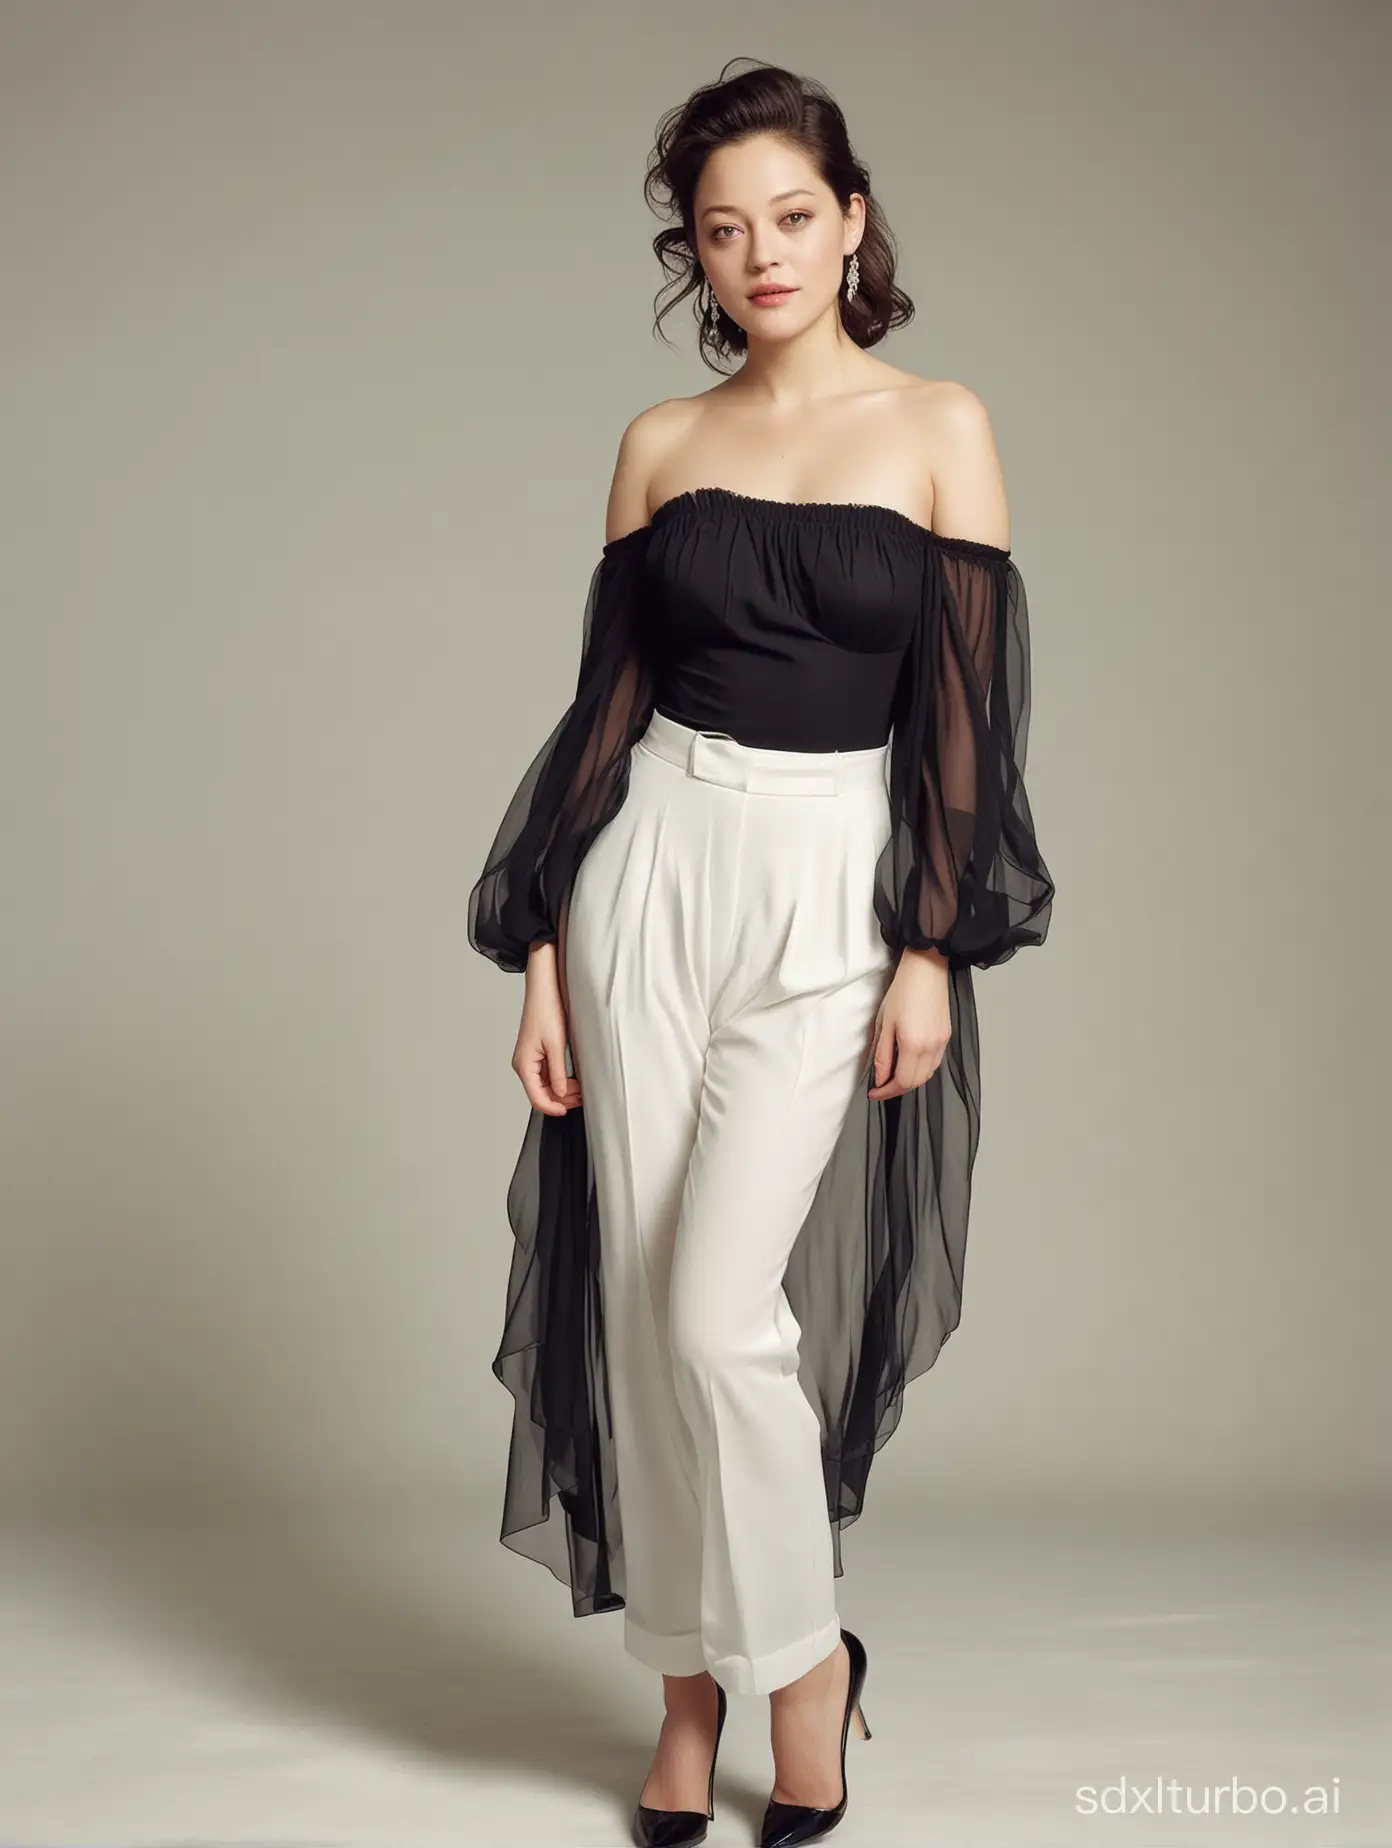 Elegant-Chinese-Woman-in-Stylish-Black-Dress-and-Sheer-Pants-Poses-Joyfully